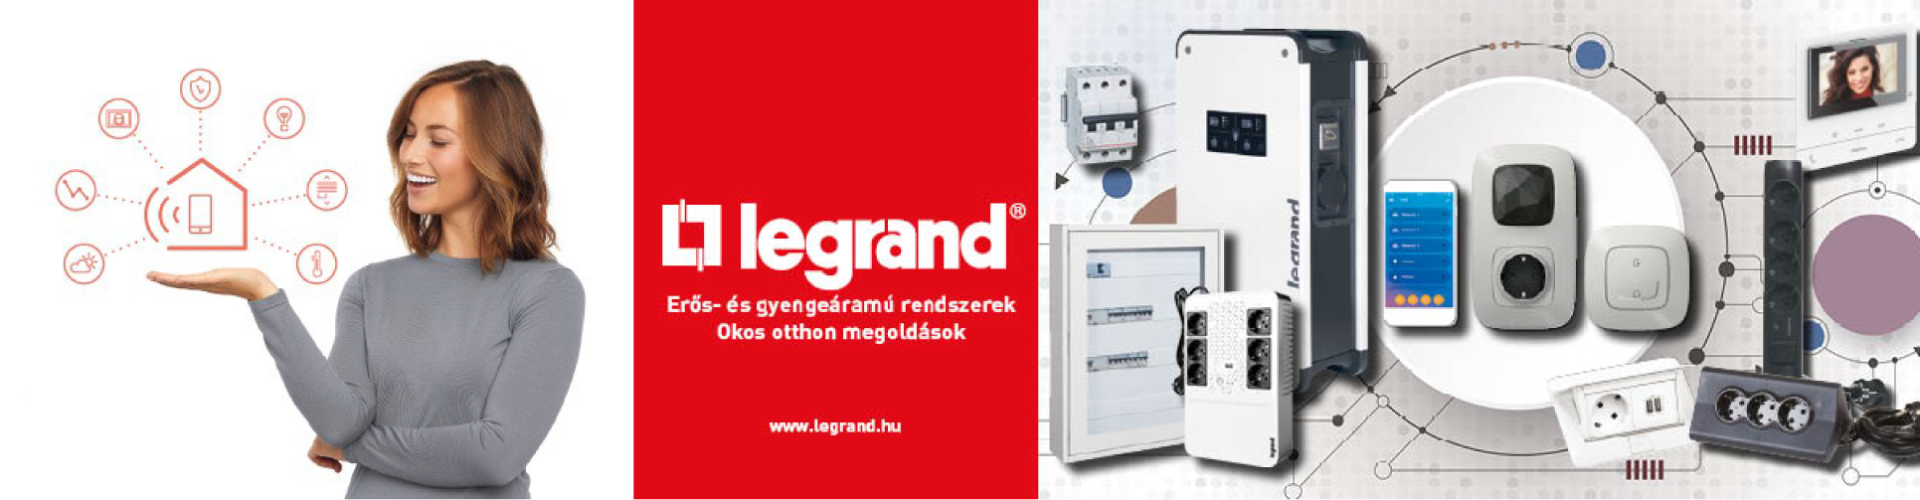 Legrand - red